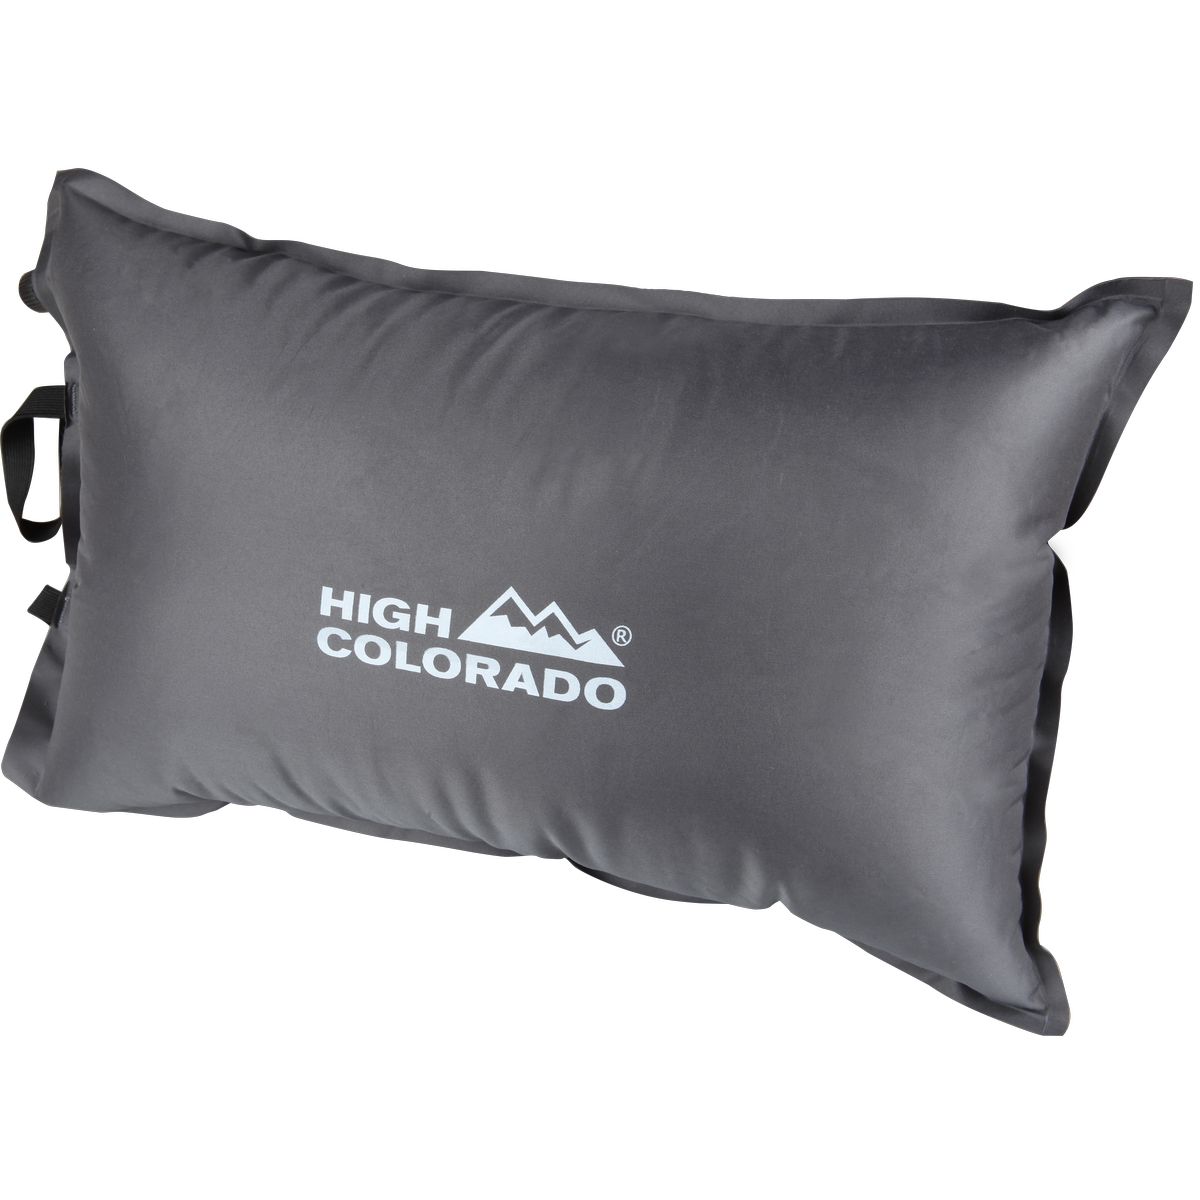 High Colorado Travel Buddy Pillow Unisex Kopfkissen